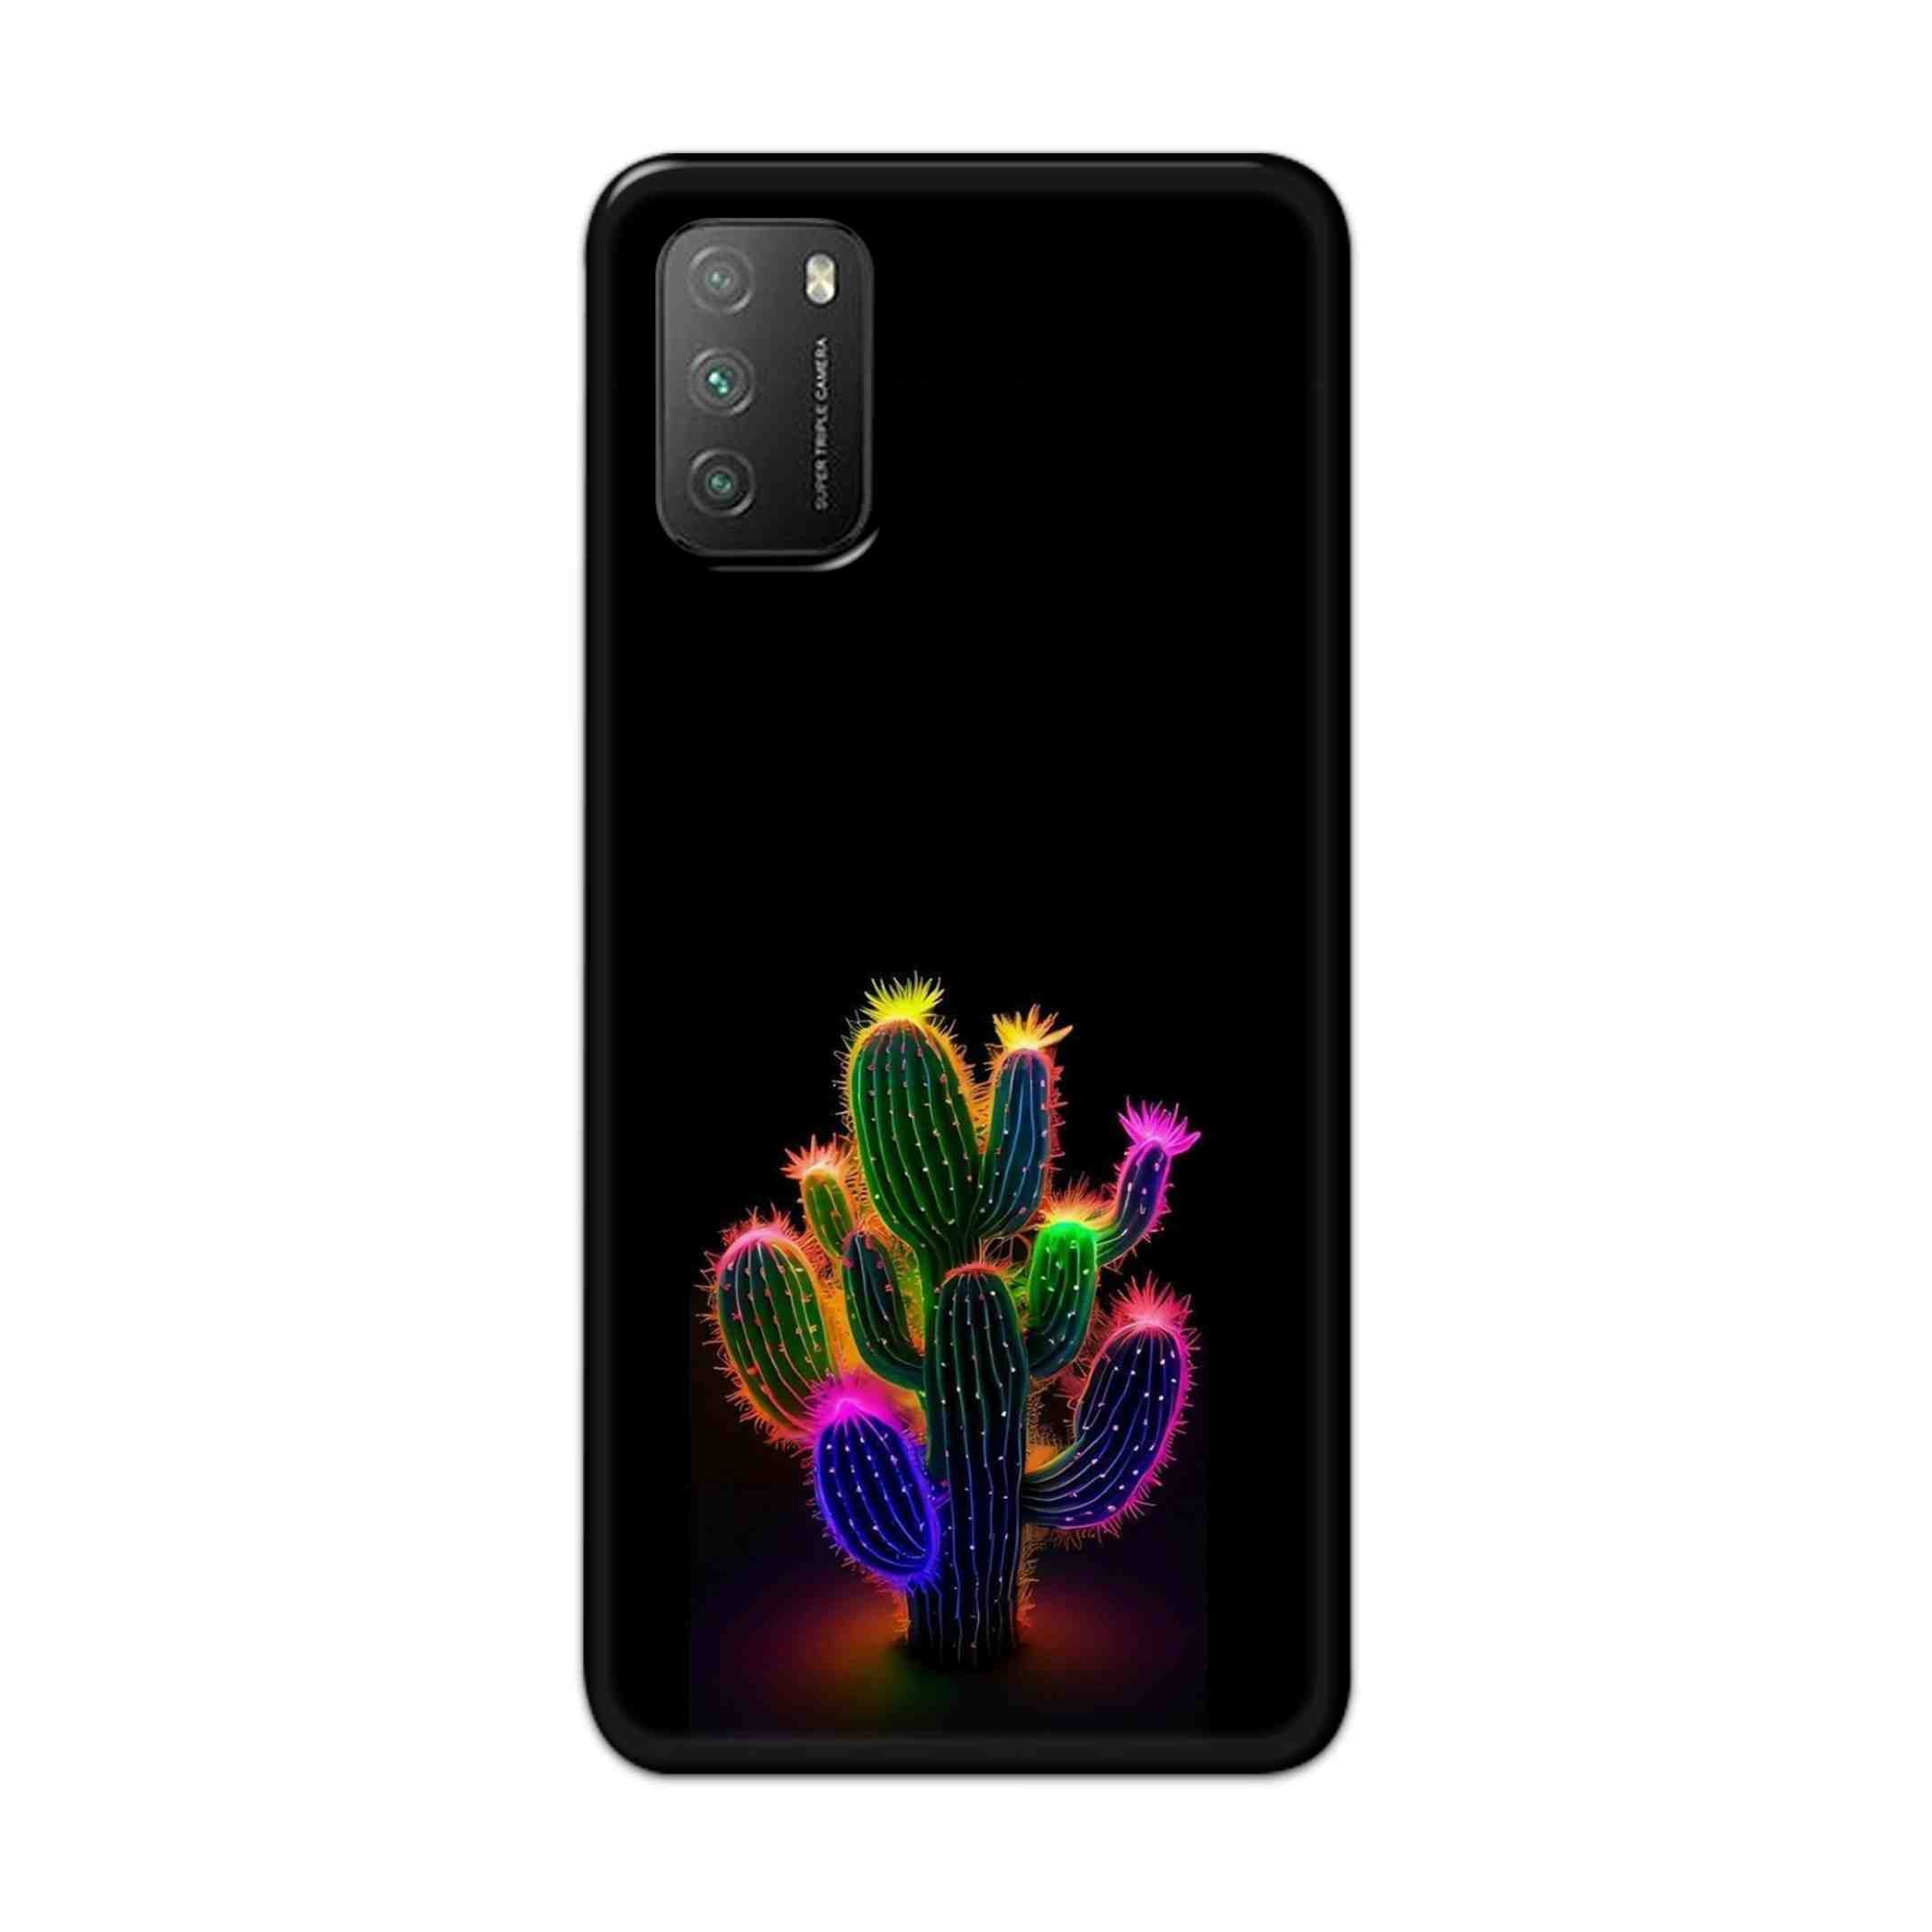 Buy Neon Flower Hard Back Mobile Phone Case Cover For Poco M3 Online